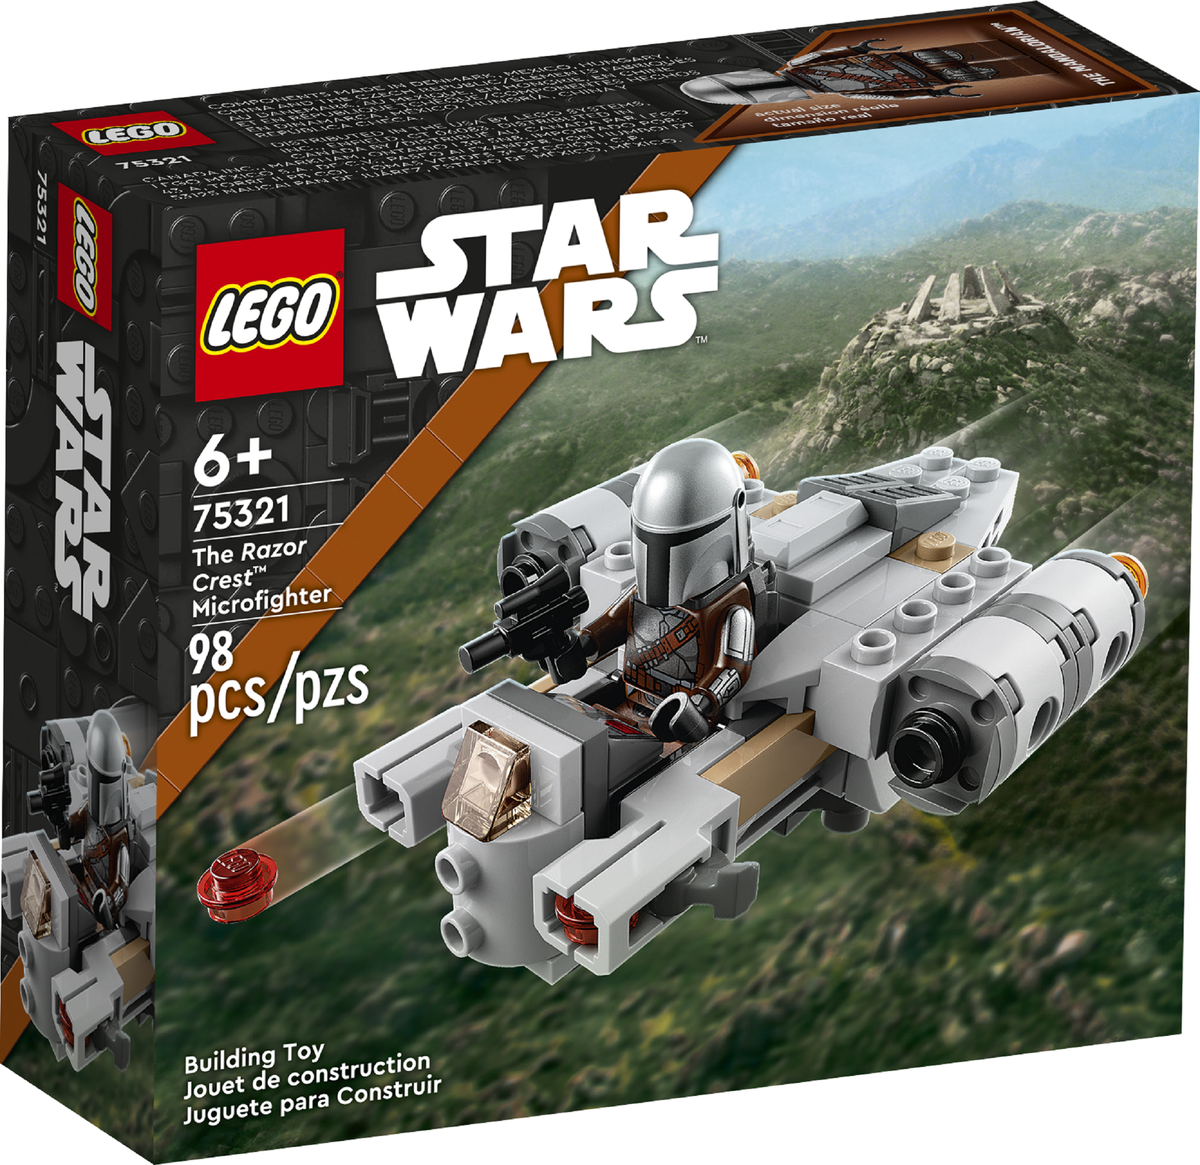 LEGO Star Wars - The Razor Crest Microfighter (75321) | LEGO